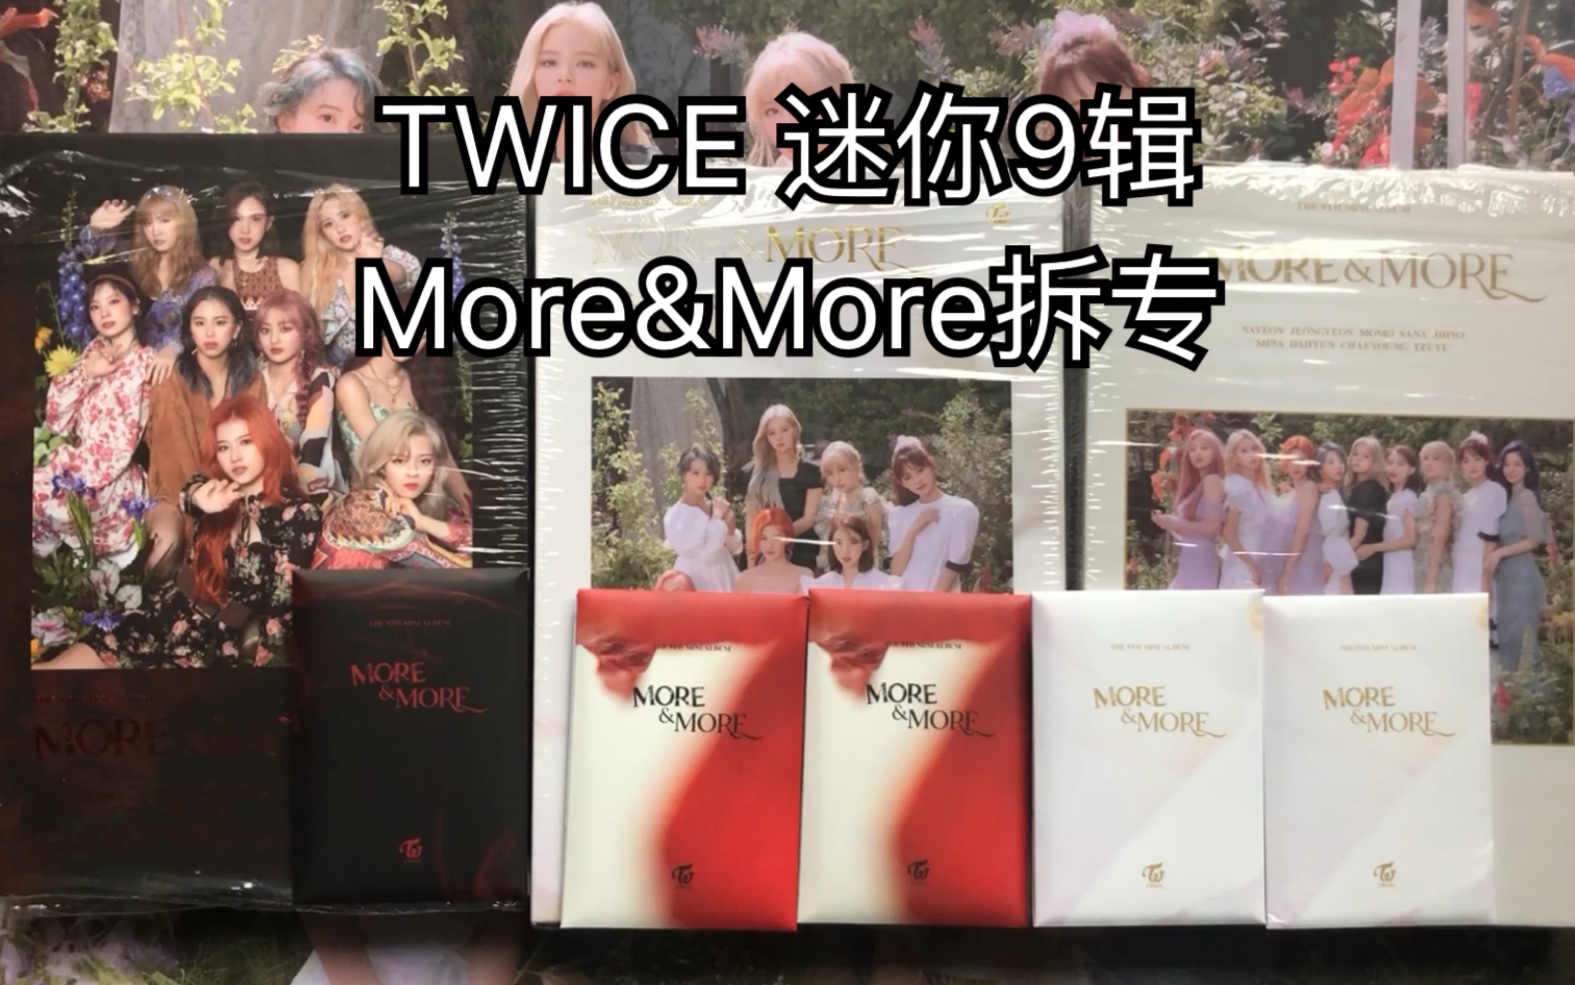 【Twice拆专】Twice迷你9辑More&More六张拆专